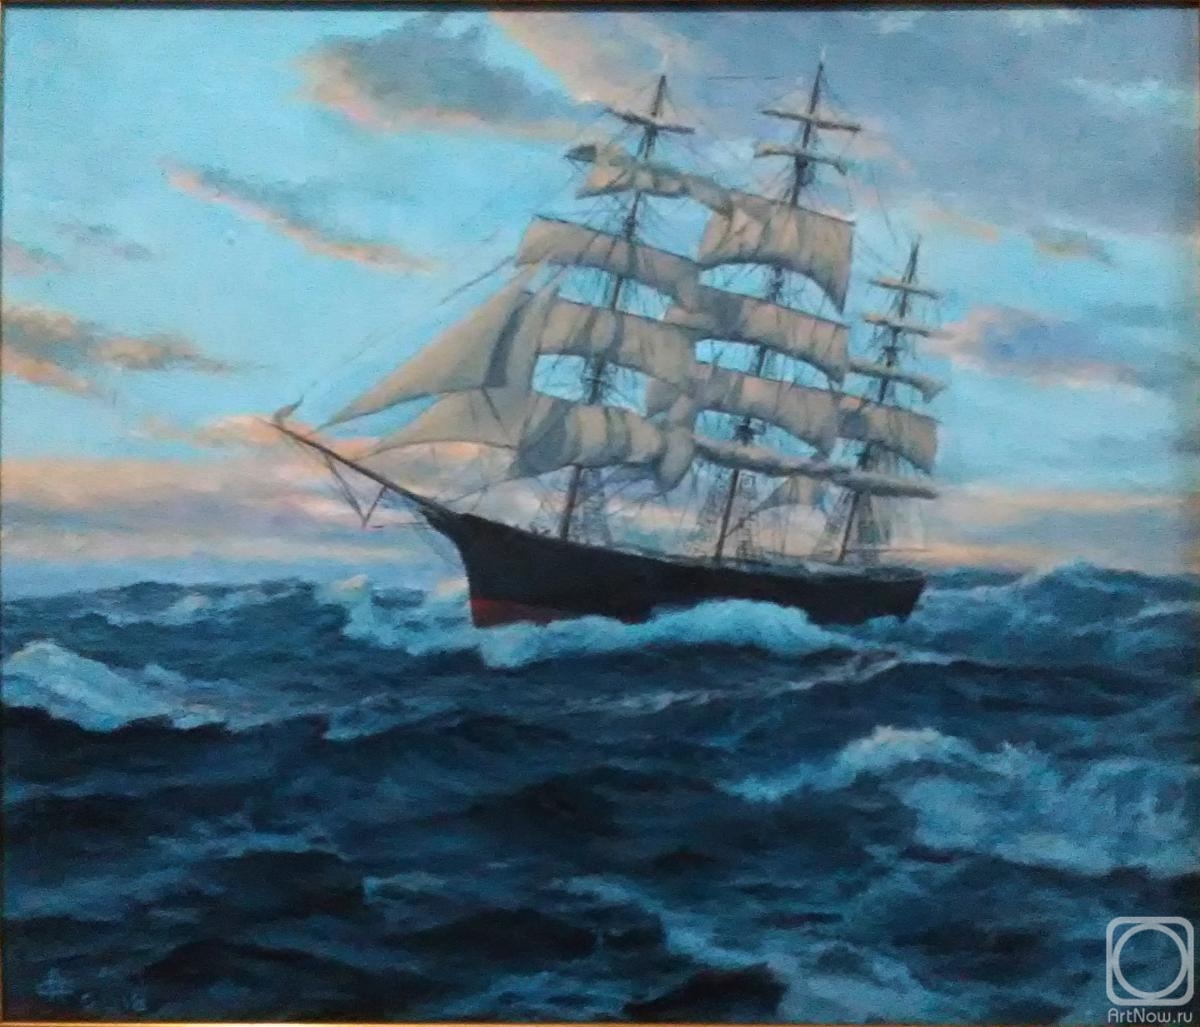 Surakin Alexandr. Sailboat in the cold sea